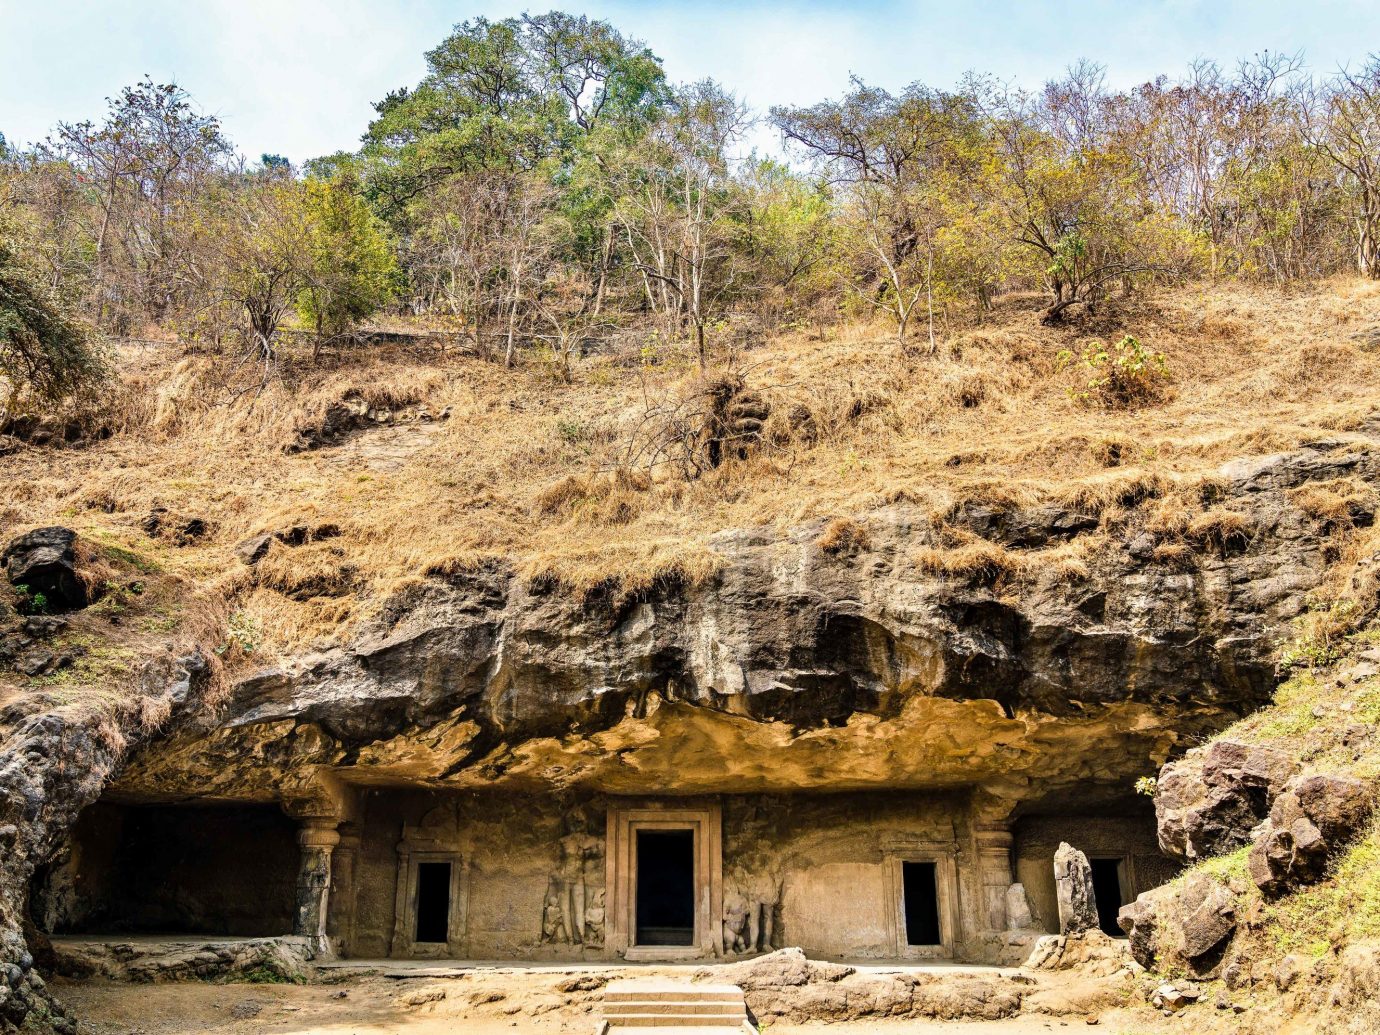 India archaeological site rock Ruins historic site outcrop geology bedrock formation escarpment plant community landscape ancient history